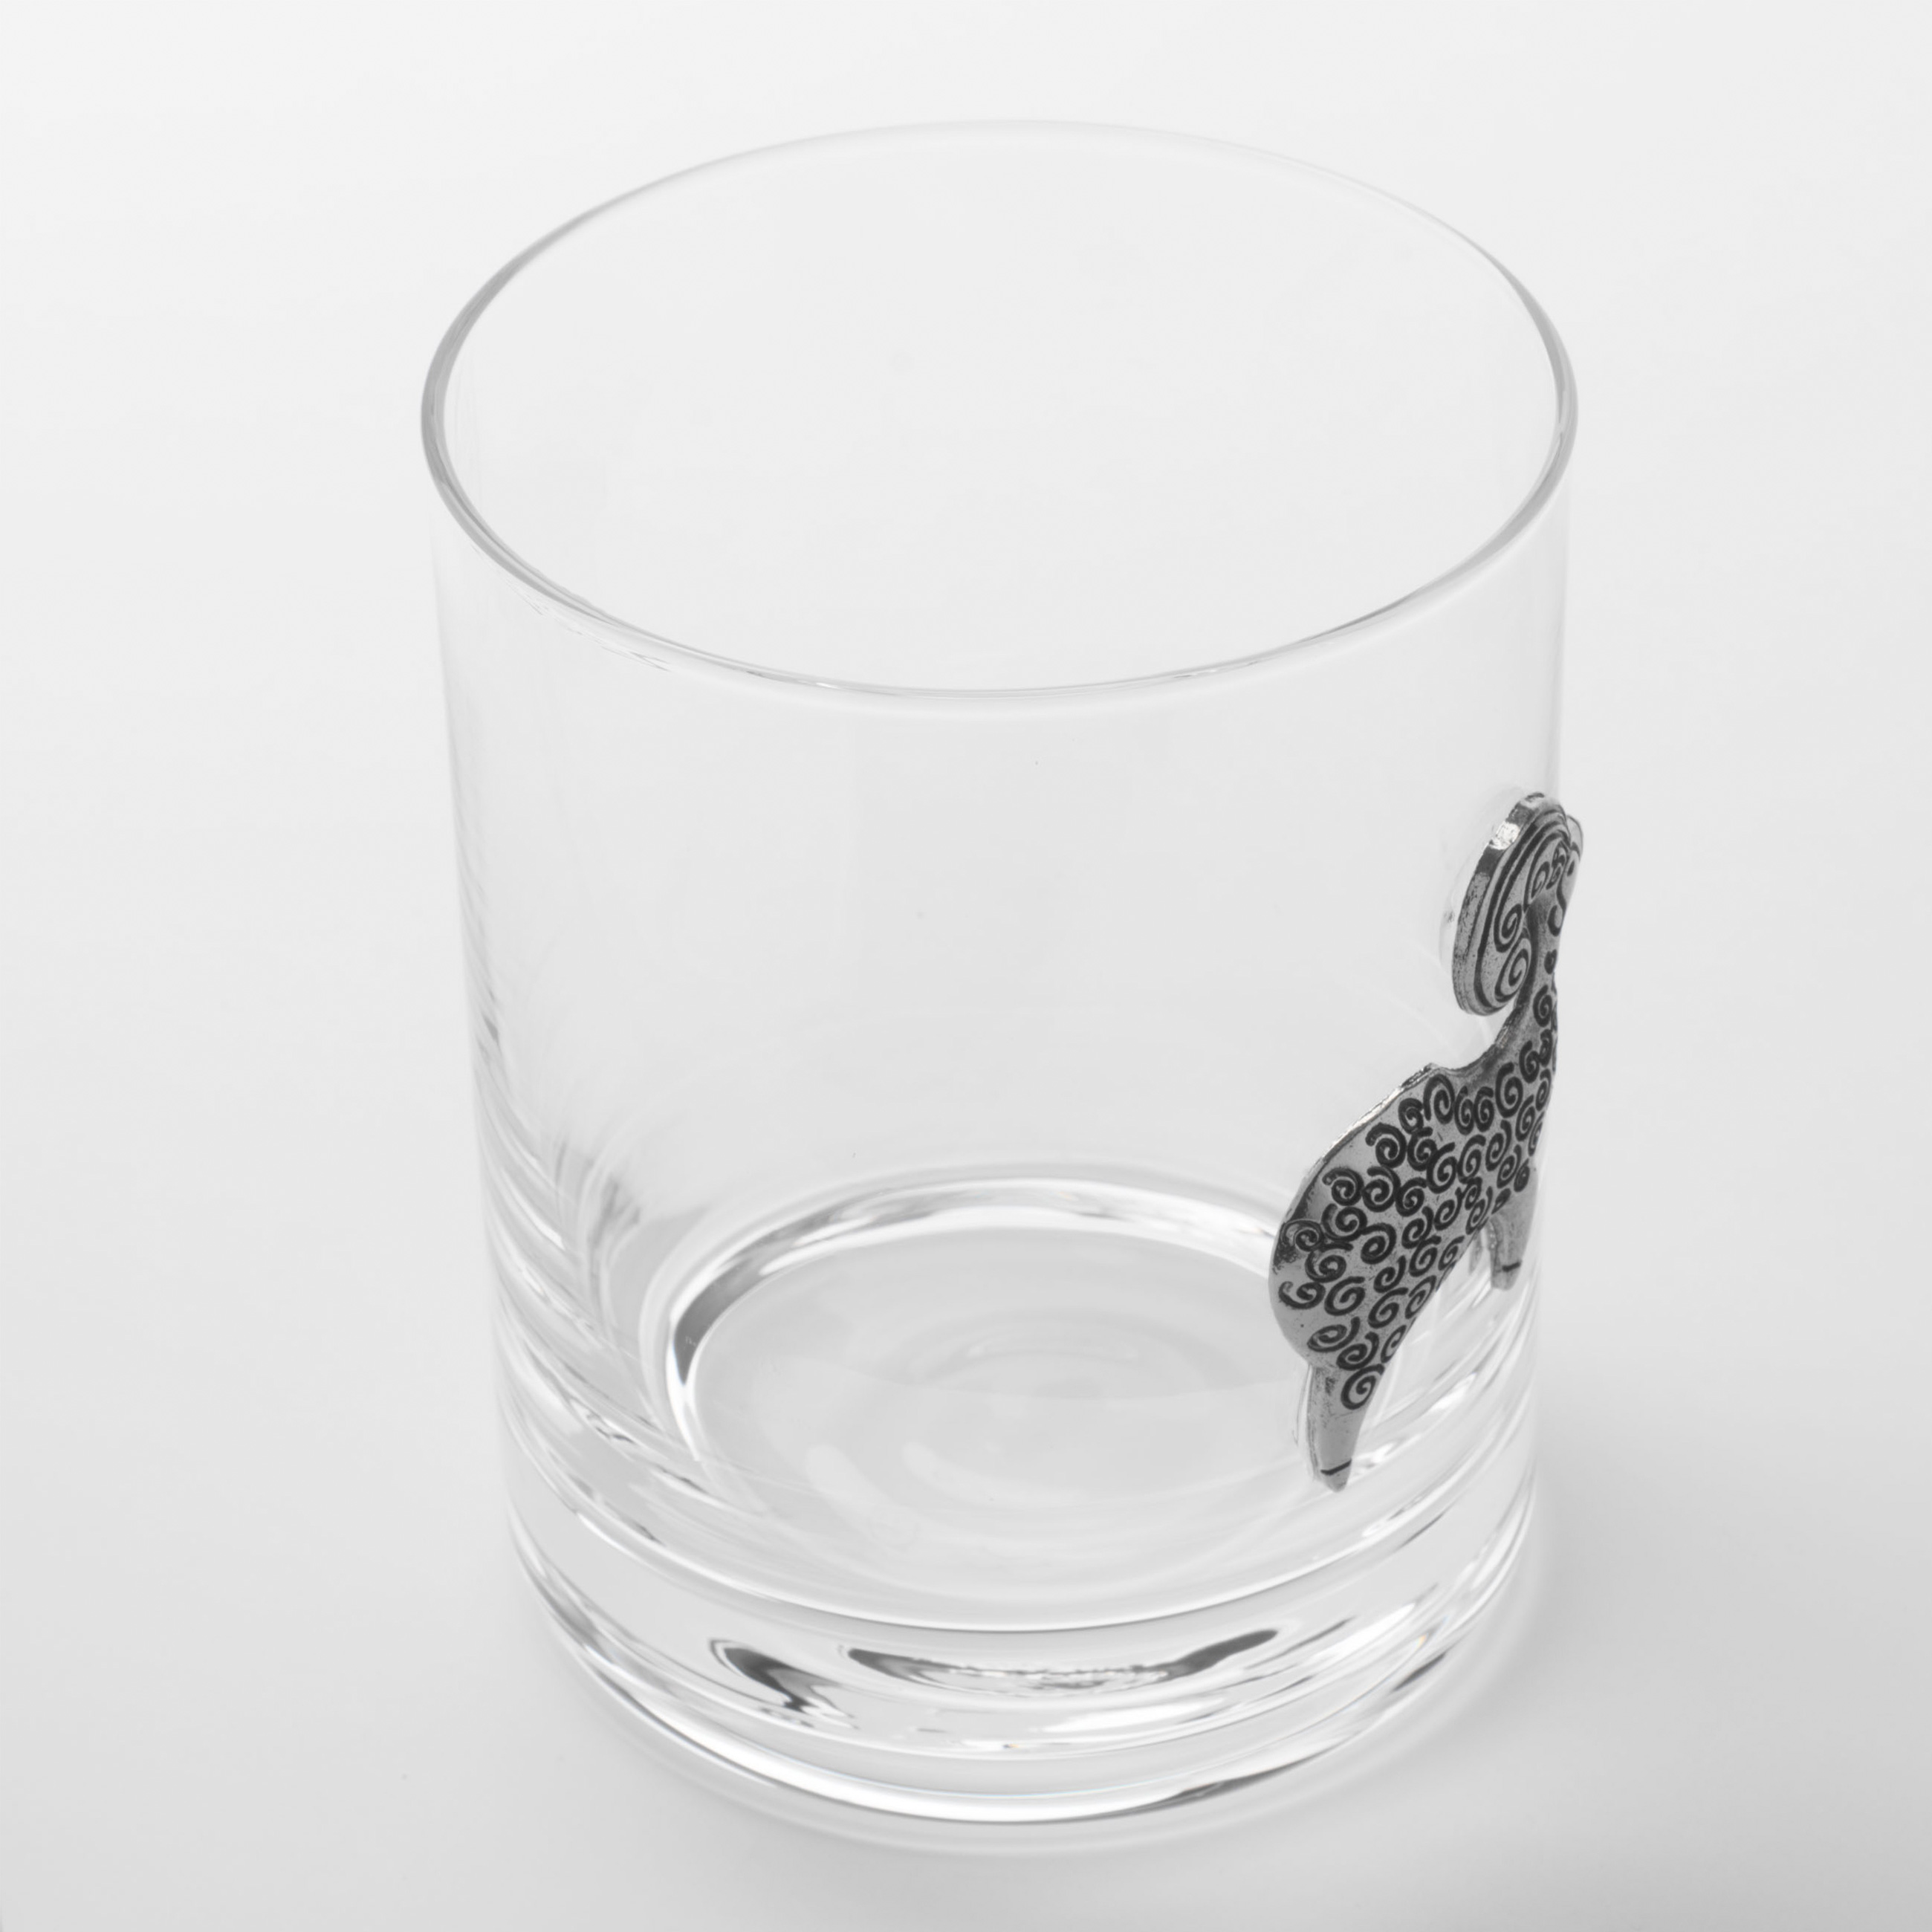 Стакан для виски, 10 см, 340 мл, стекло/металл, серебристый, Овен, Zodiac изображение № 3